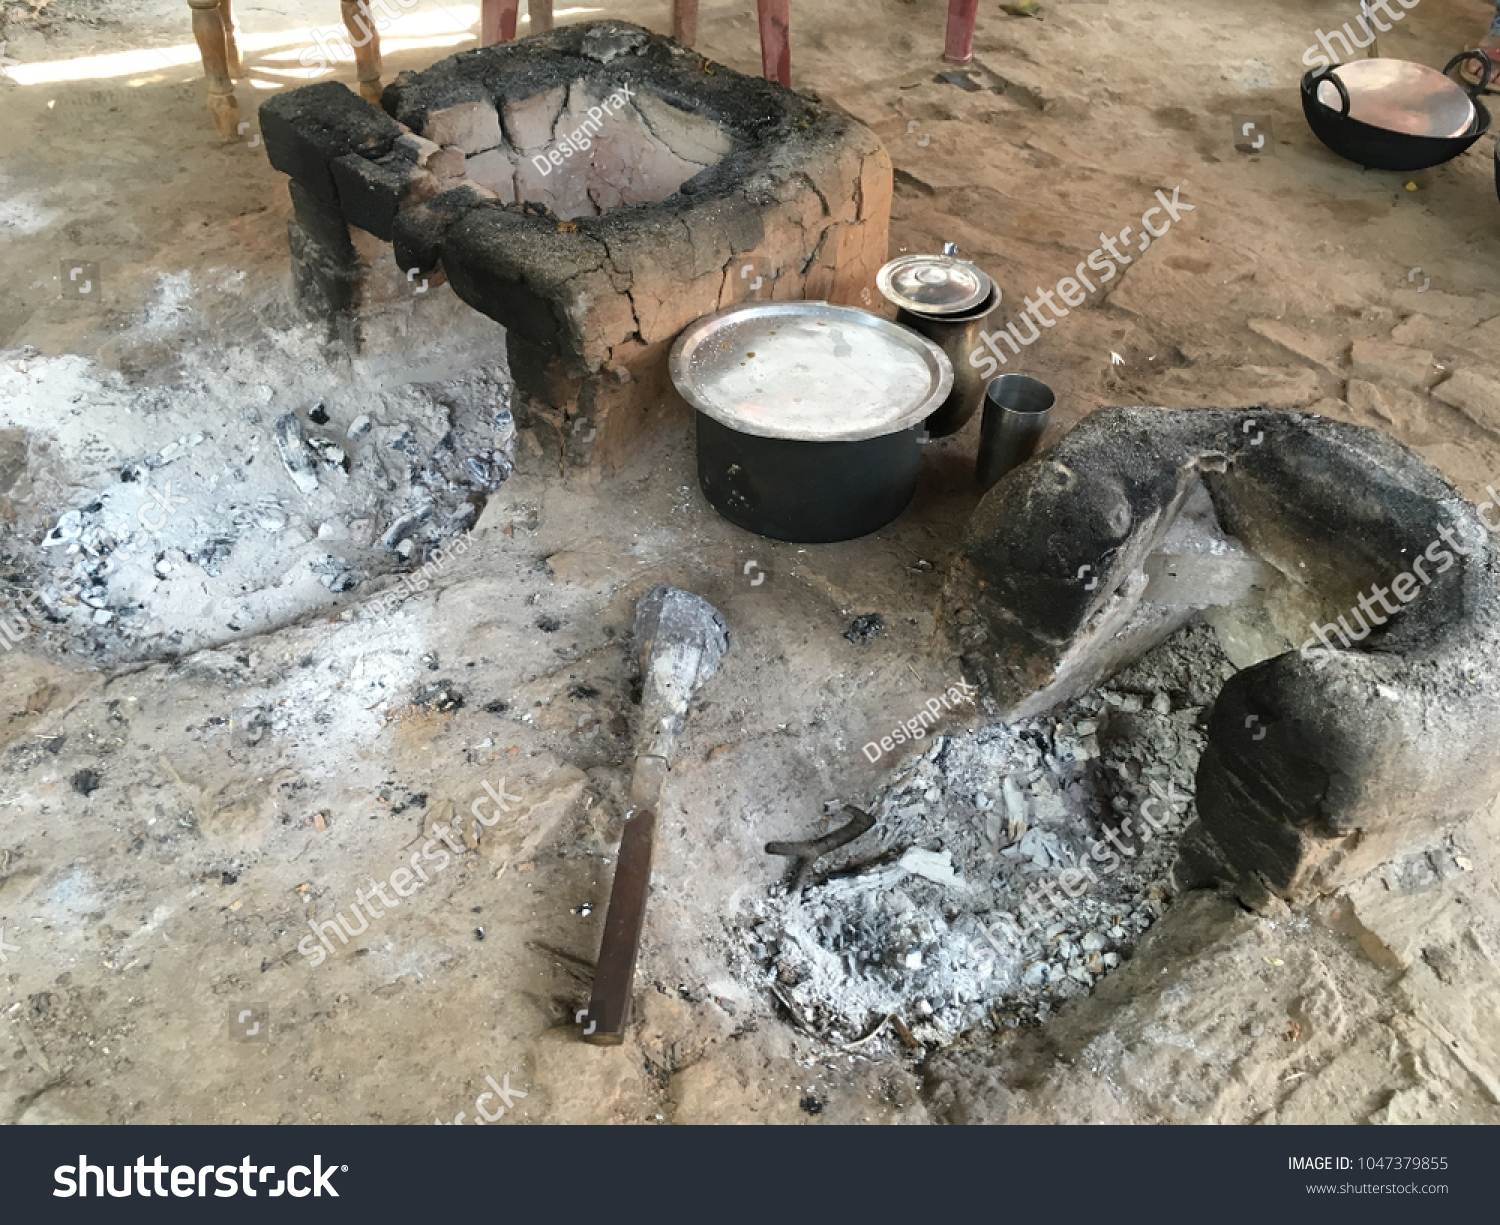 Cooking Mud Brick Stove in Rural India #1047379855